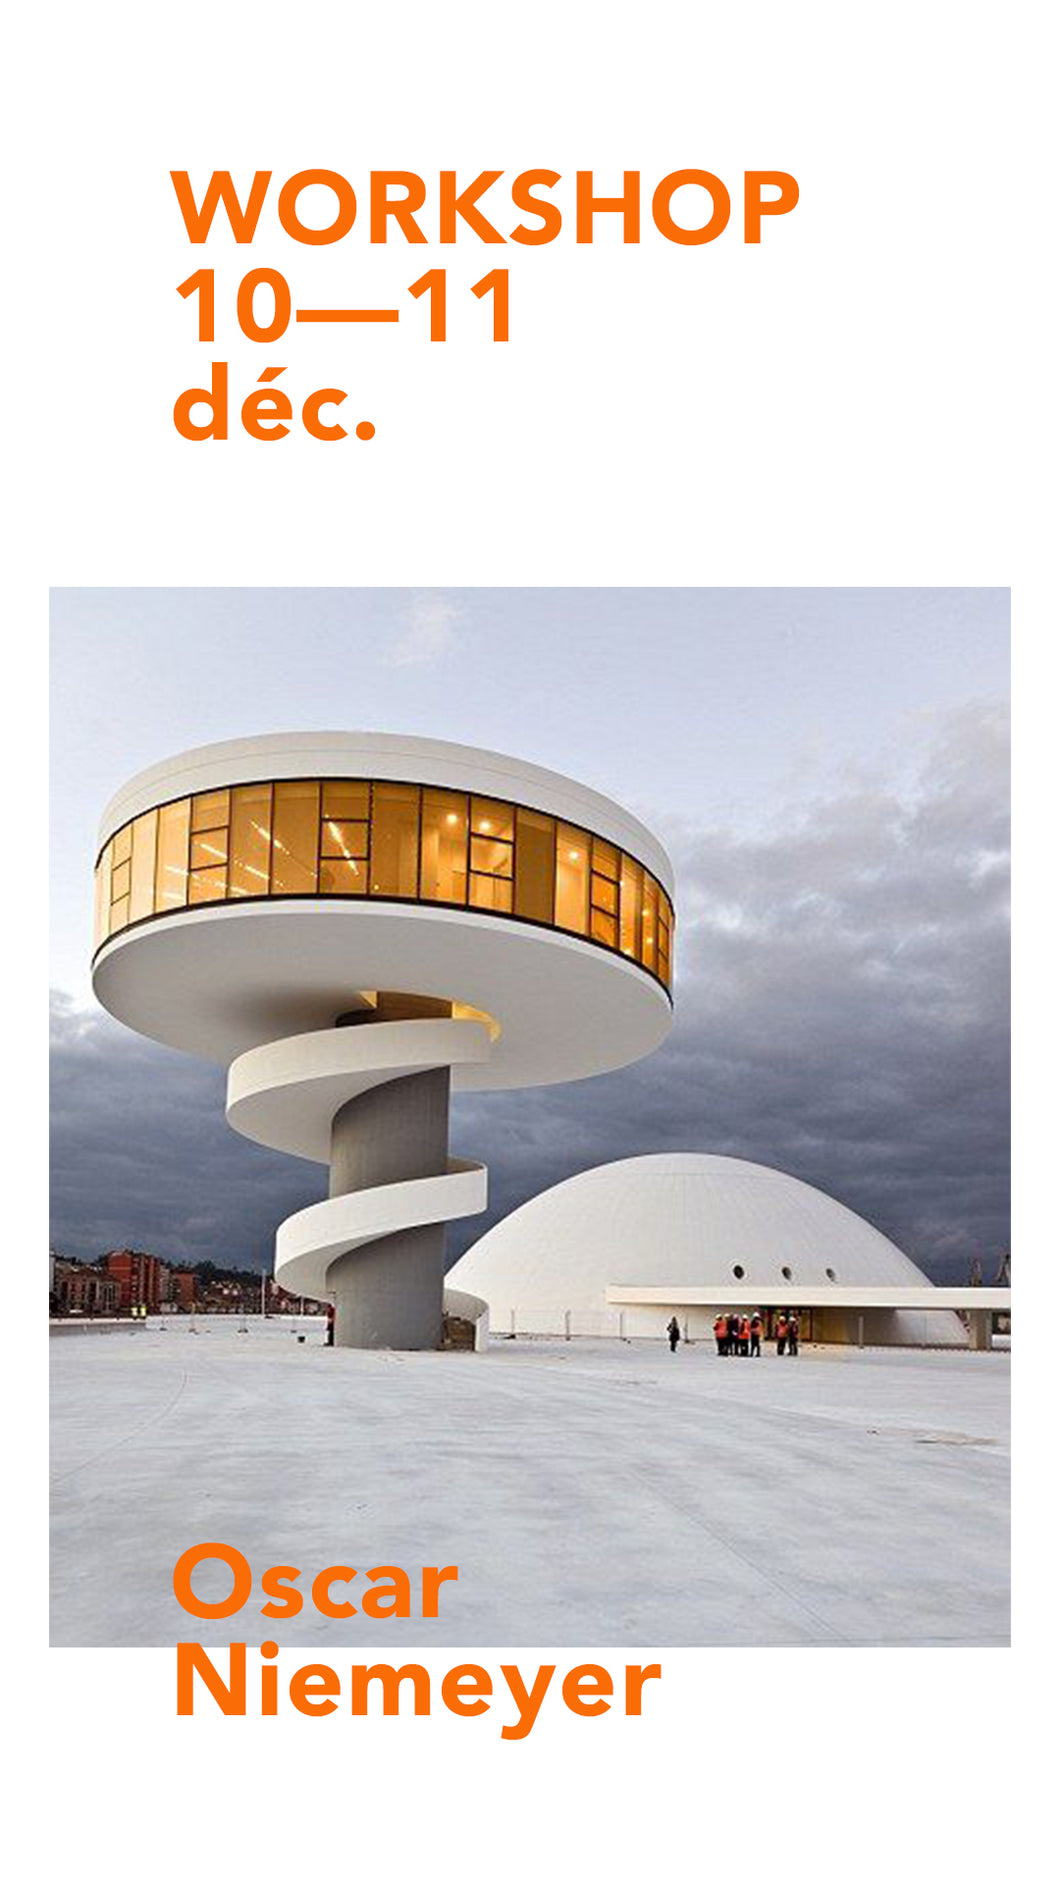 Workshop Oscar Niemeyer